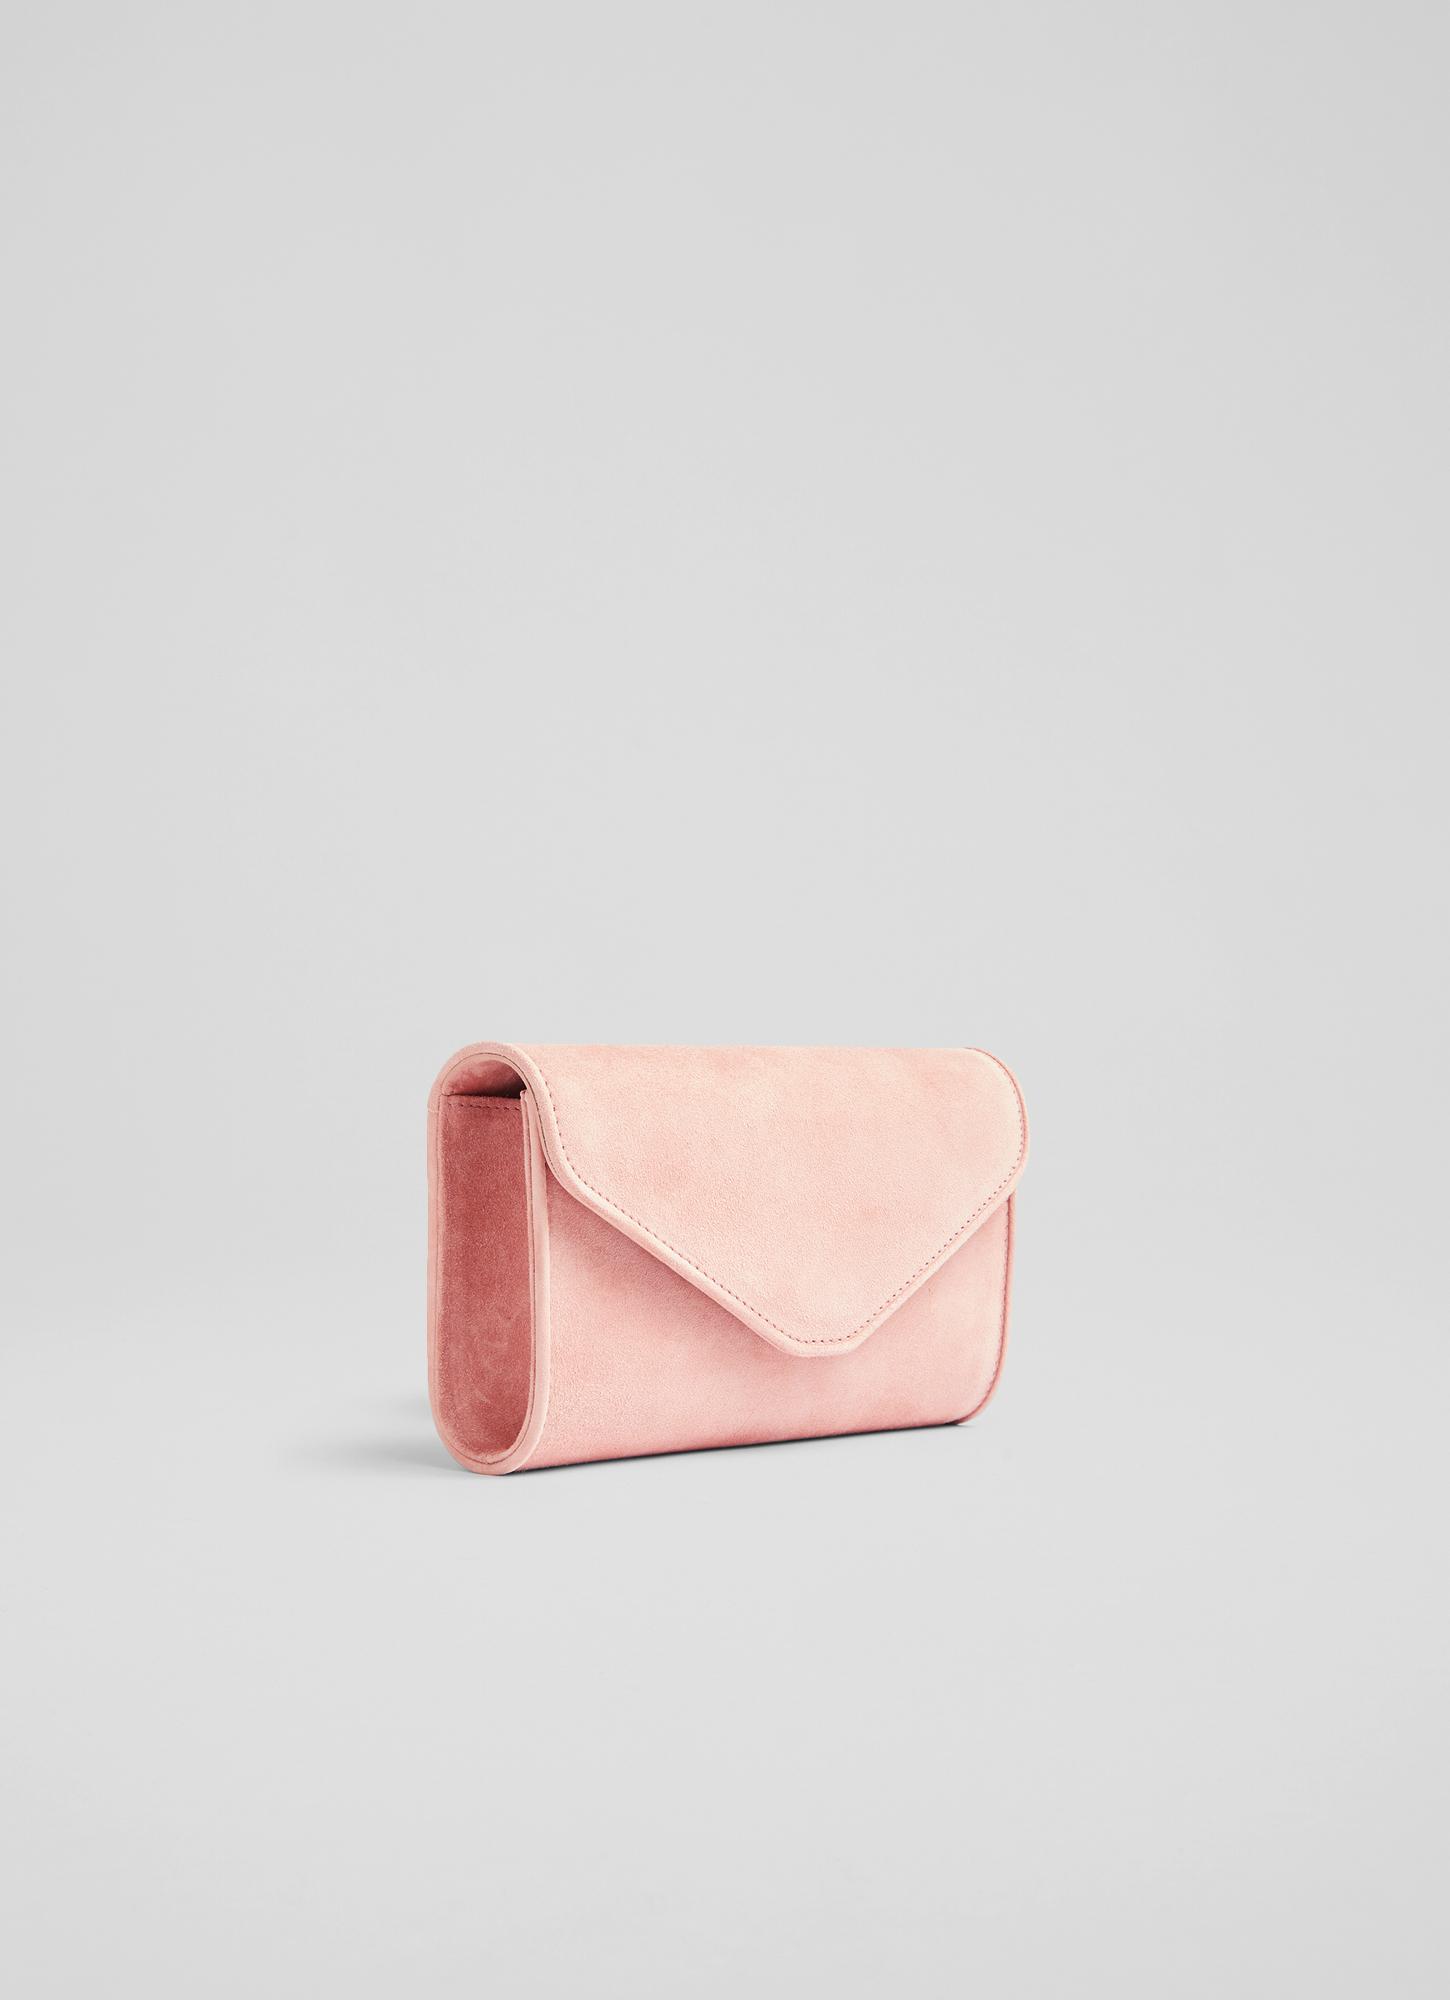 Pink suede bag - LaLus